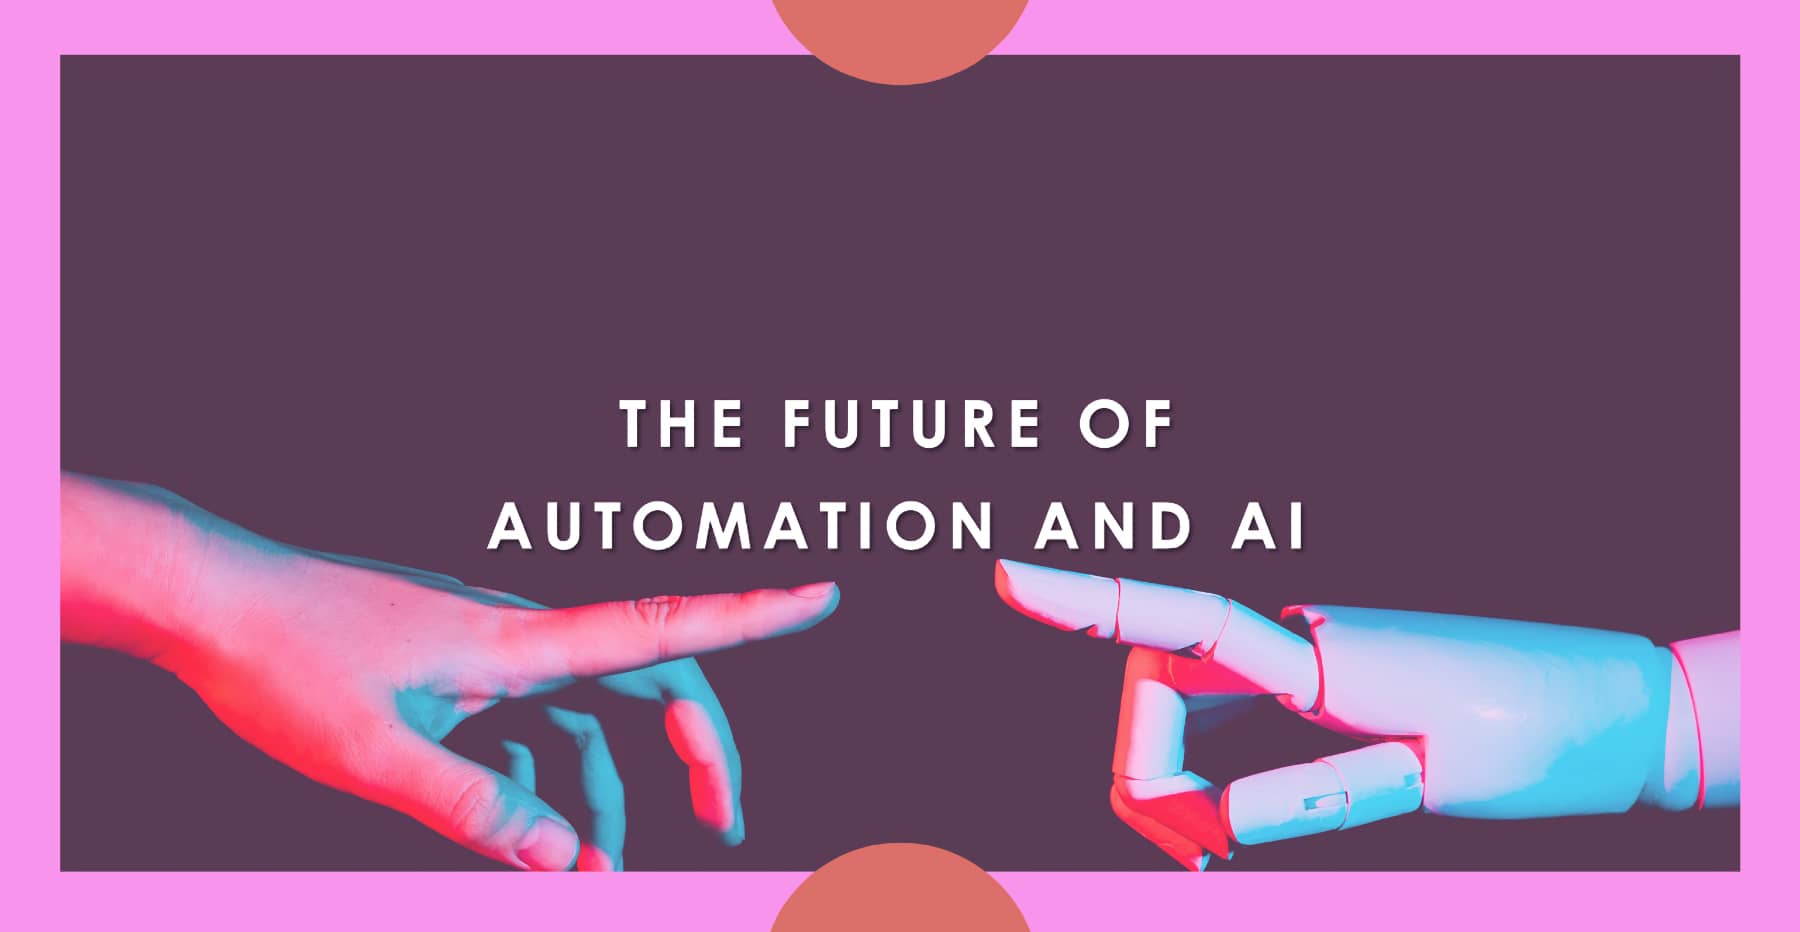 The Future of Automation and AI